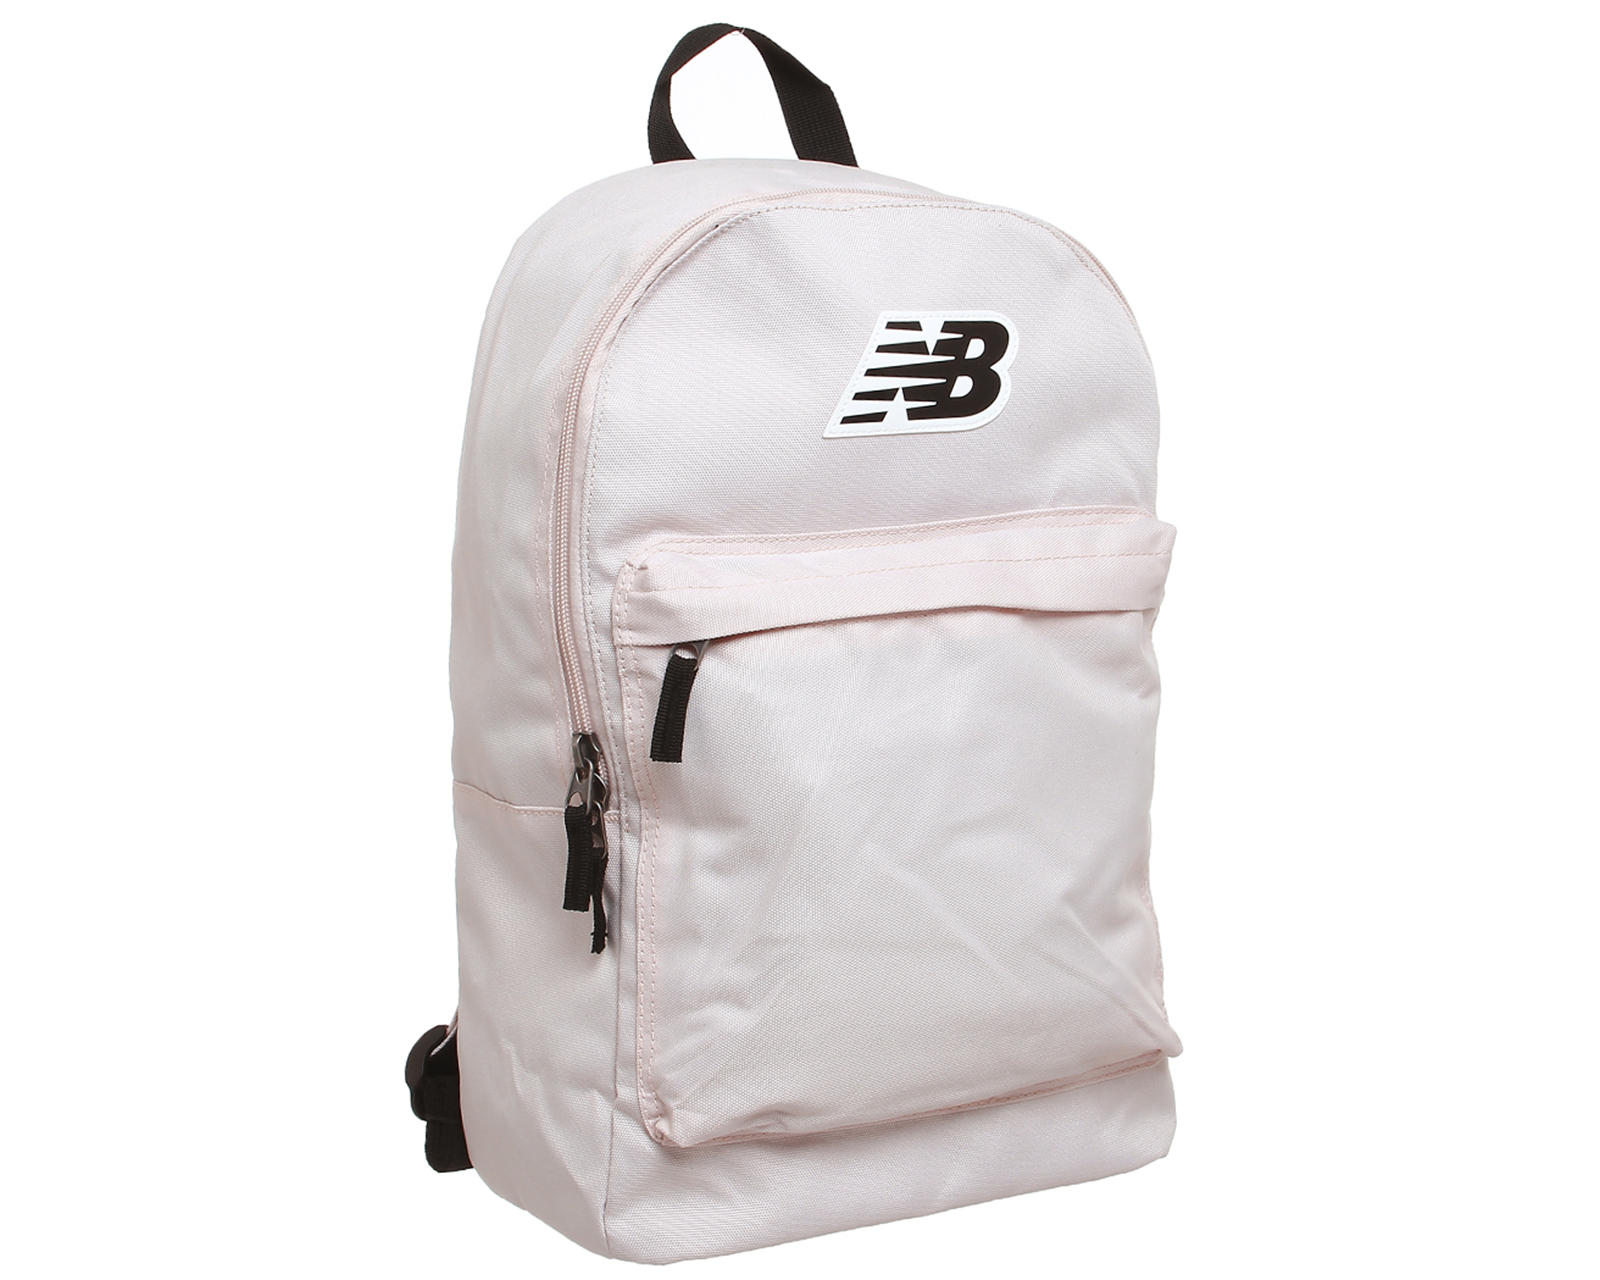 New BalanceNb Classic BackpackSandstone